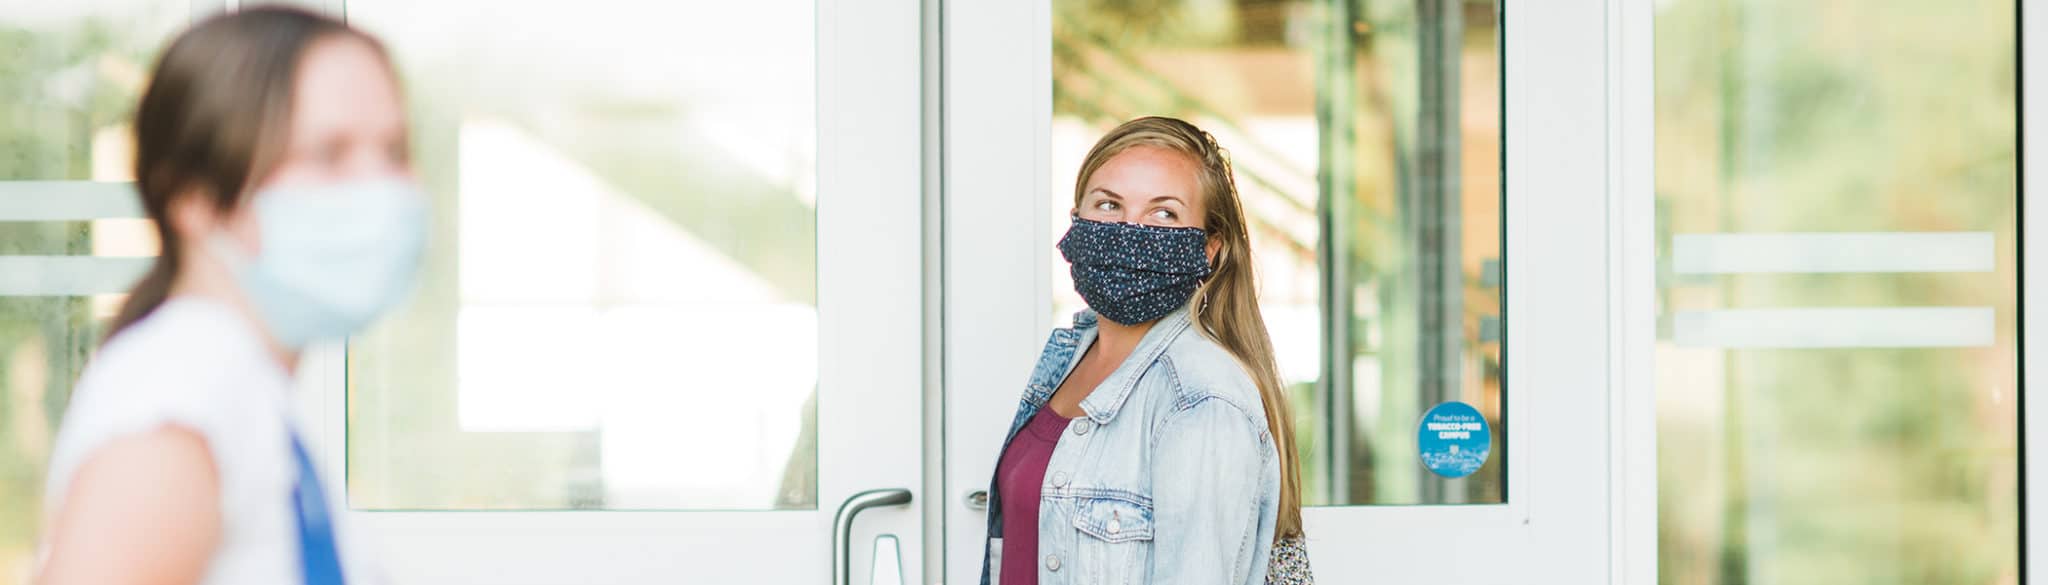 female students wearing masks outside